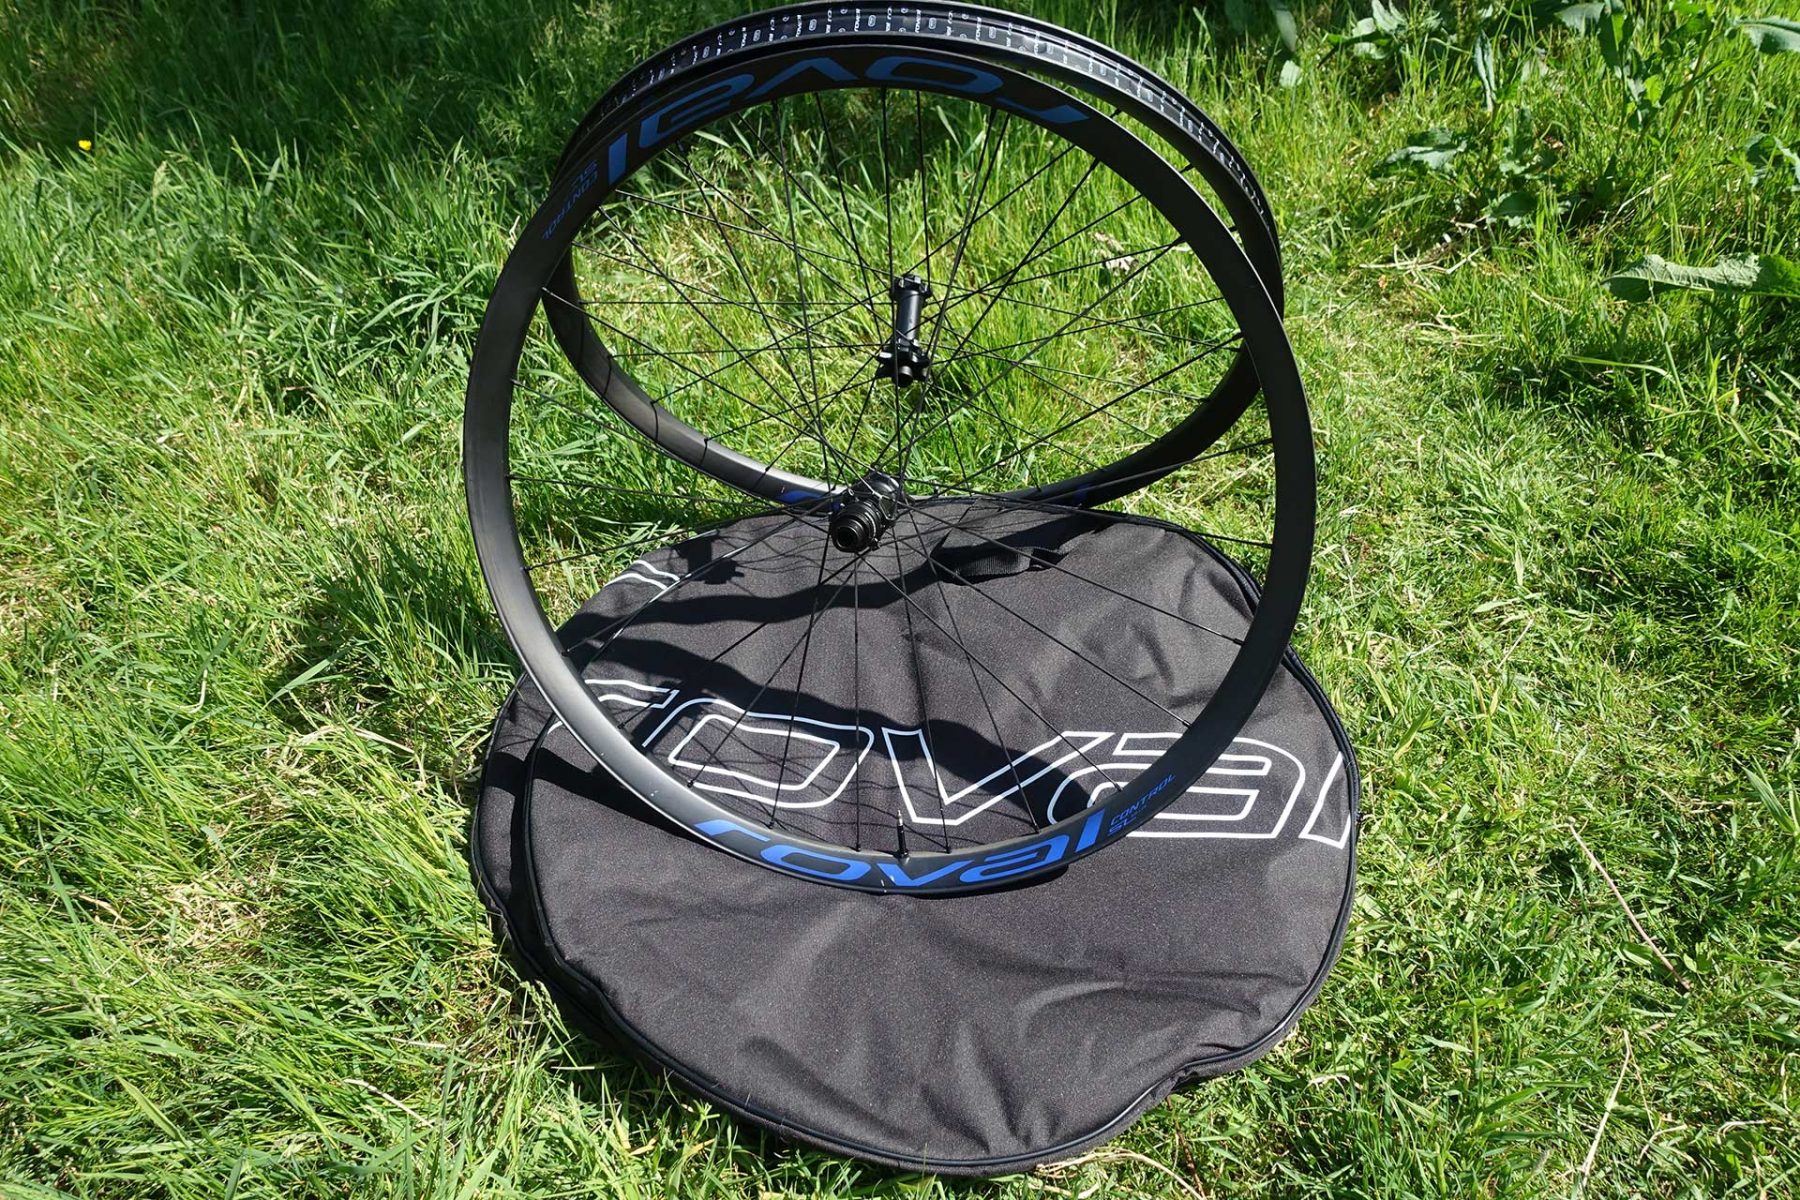 roval control sl team wheels and wheel bag